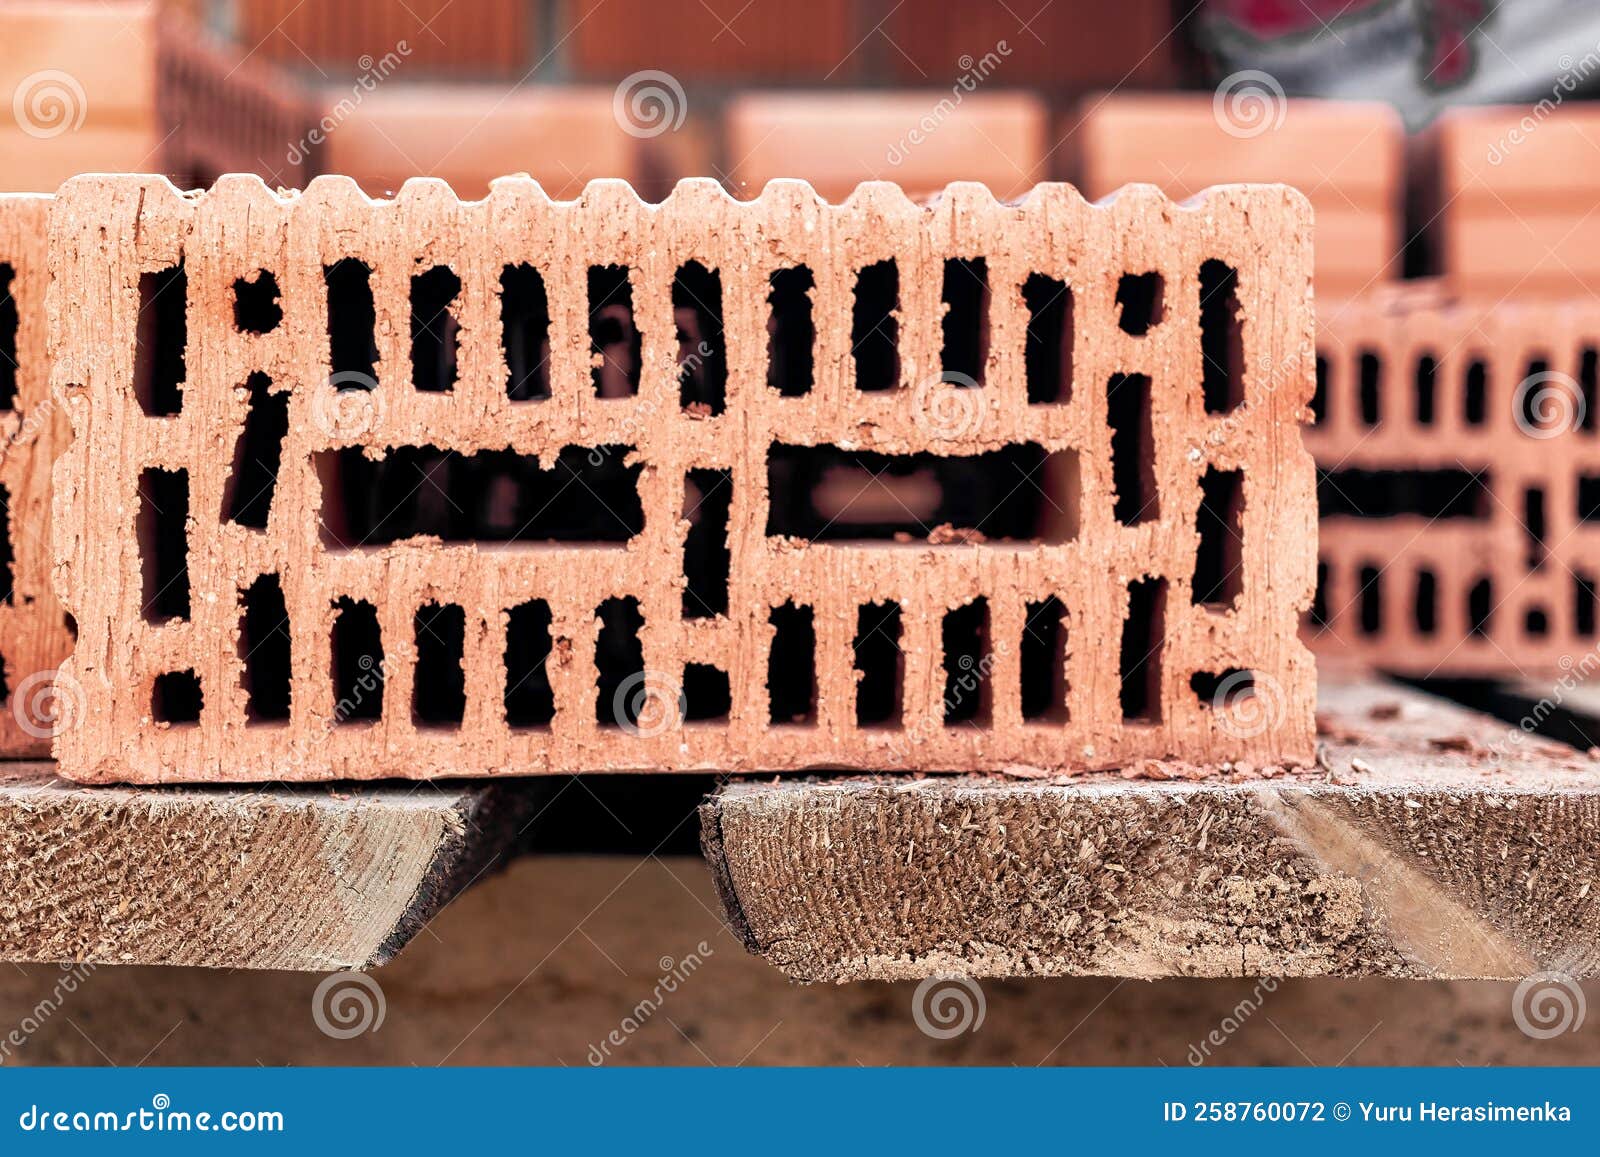 Construction De Murs En Briques Céramiques Keramoblock Brique